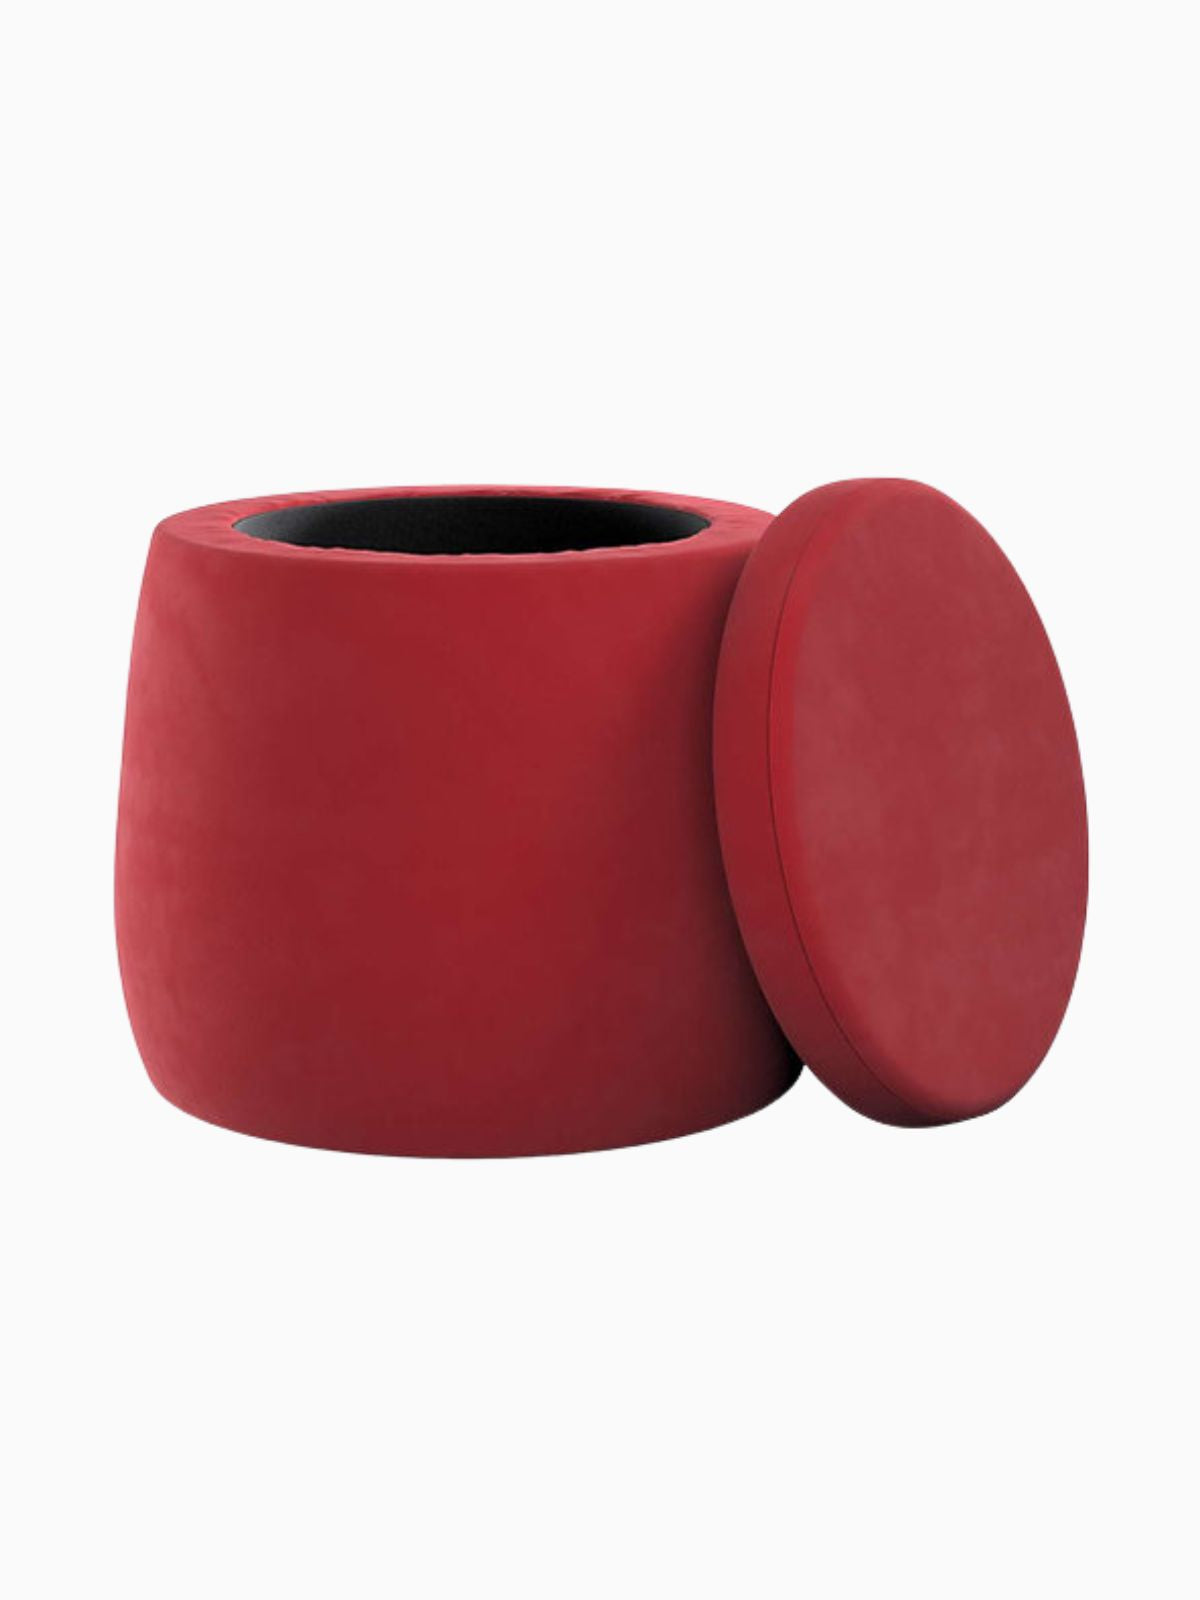 Pouf contenitore Candy Jar in velluto, colore rosso 40x40 cm.